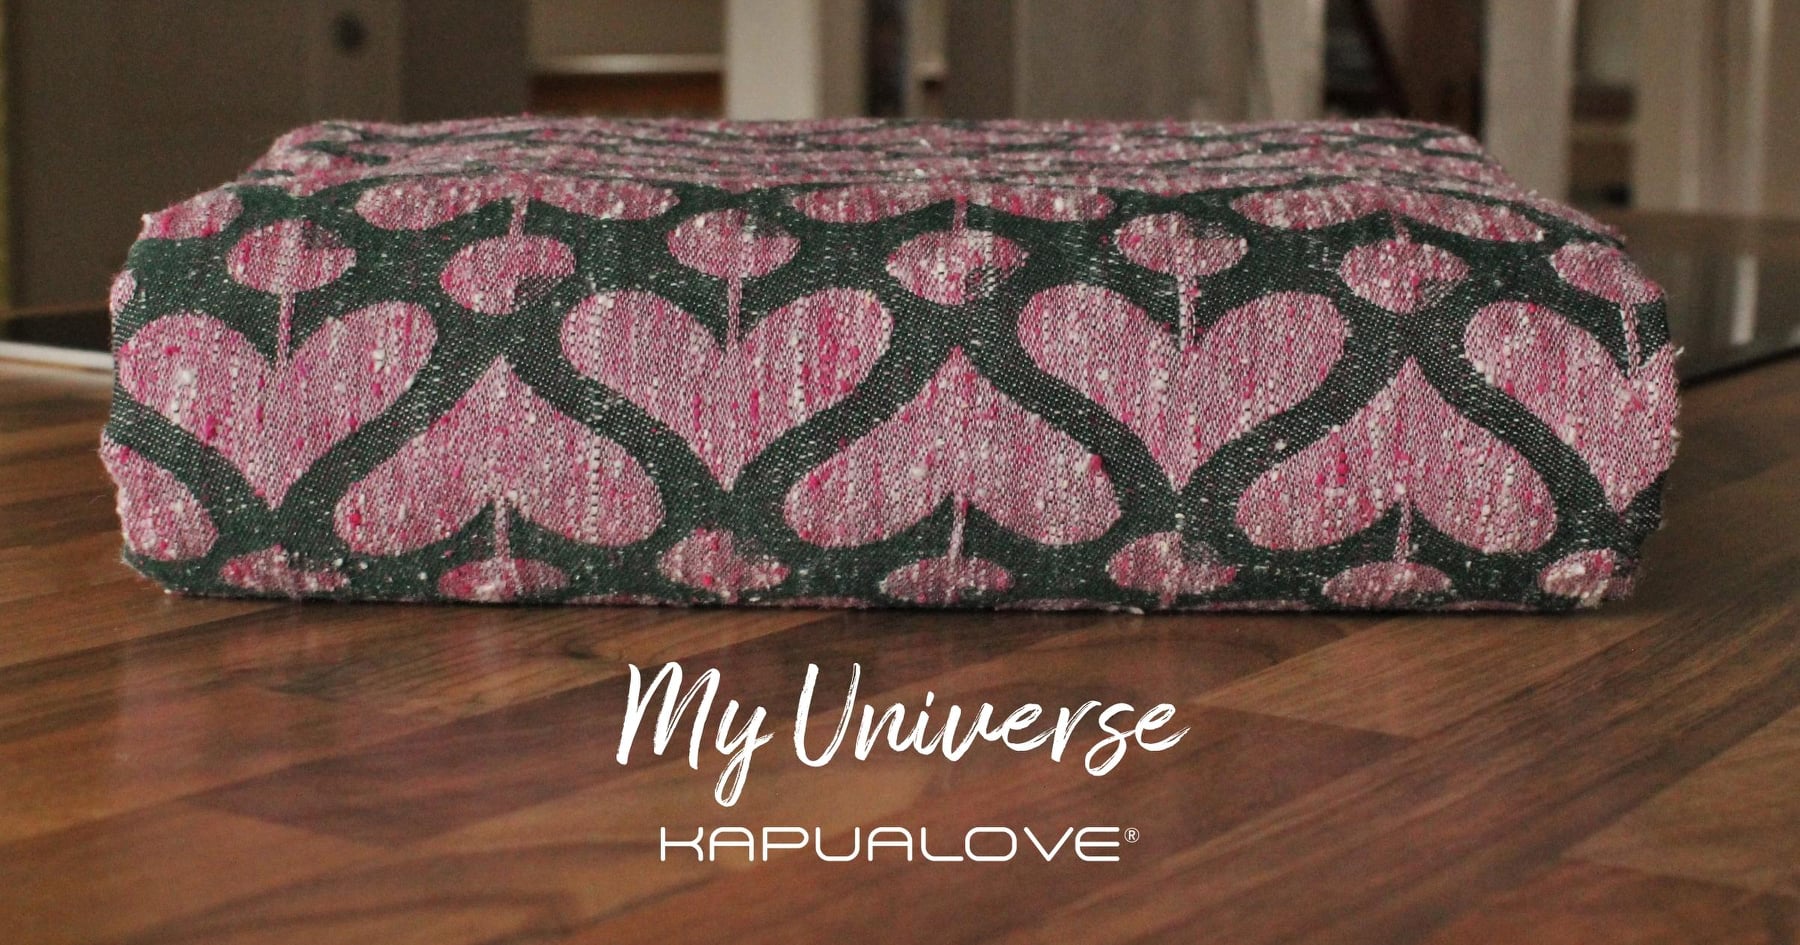 KAPUALOVE MUTTERLIEBE - My Universe (tussah) Image